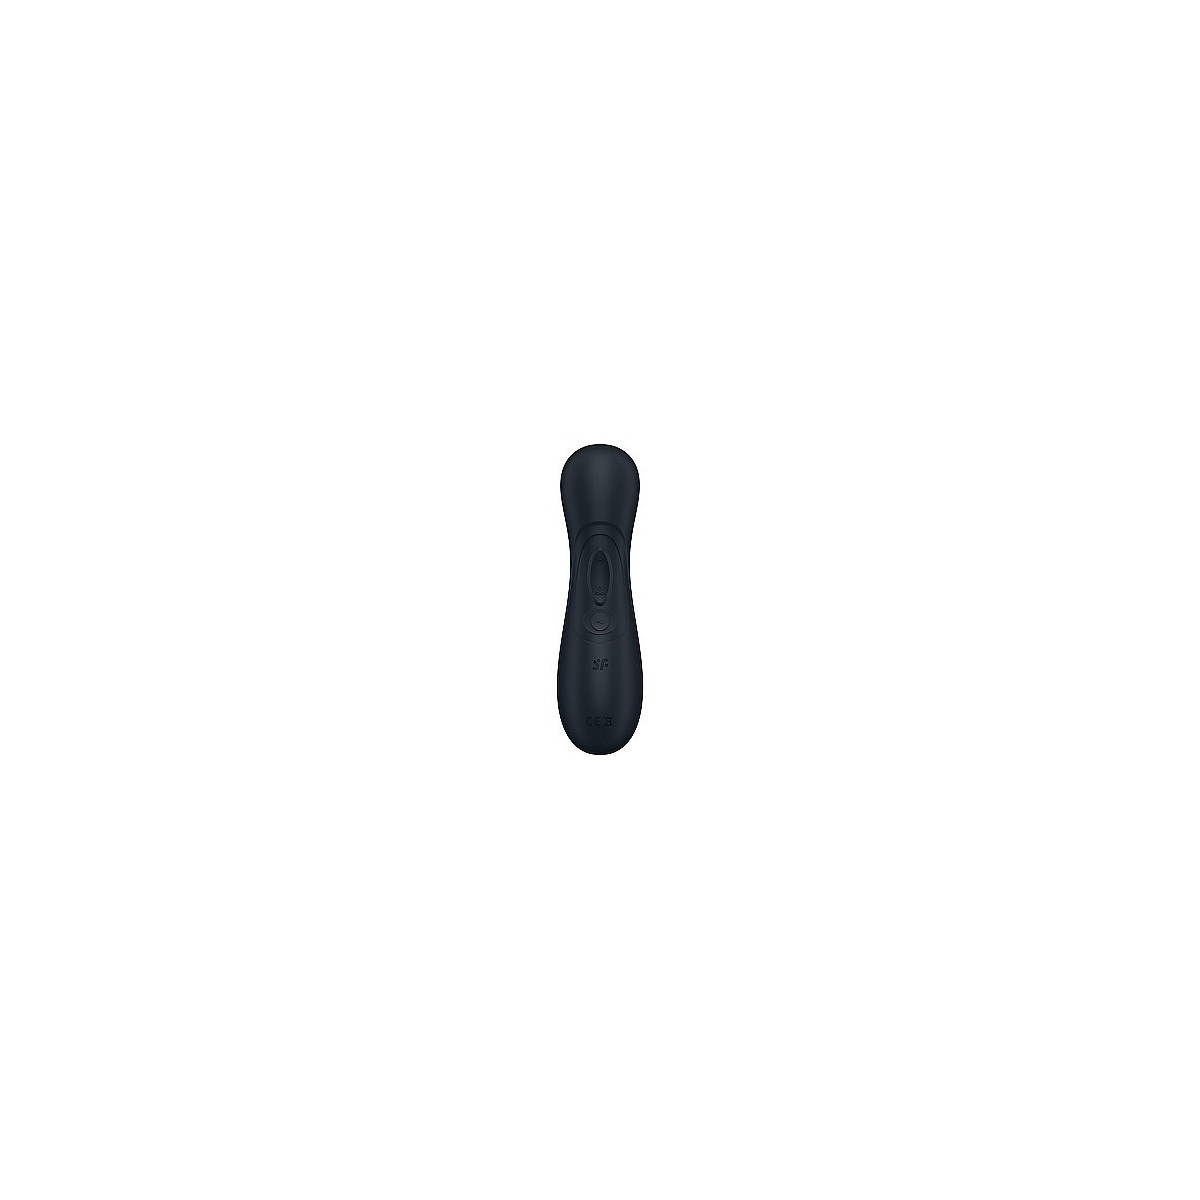 Succhia clitoride vibrante Pro 2 Generation 3 + Liquid Air Vibration & App Black